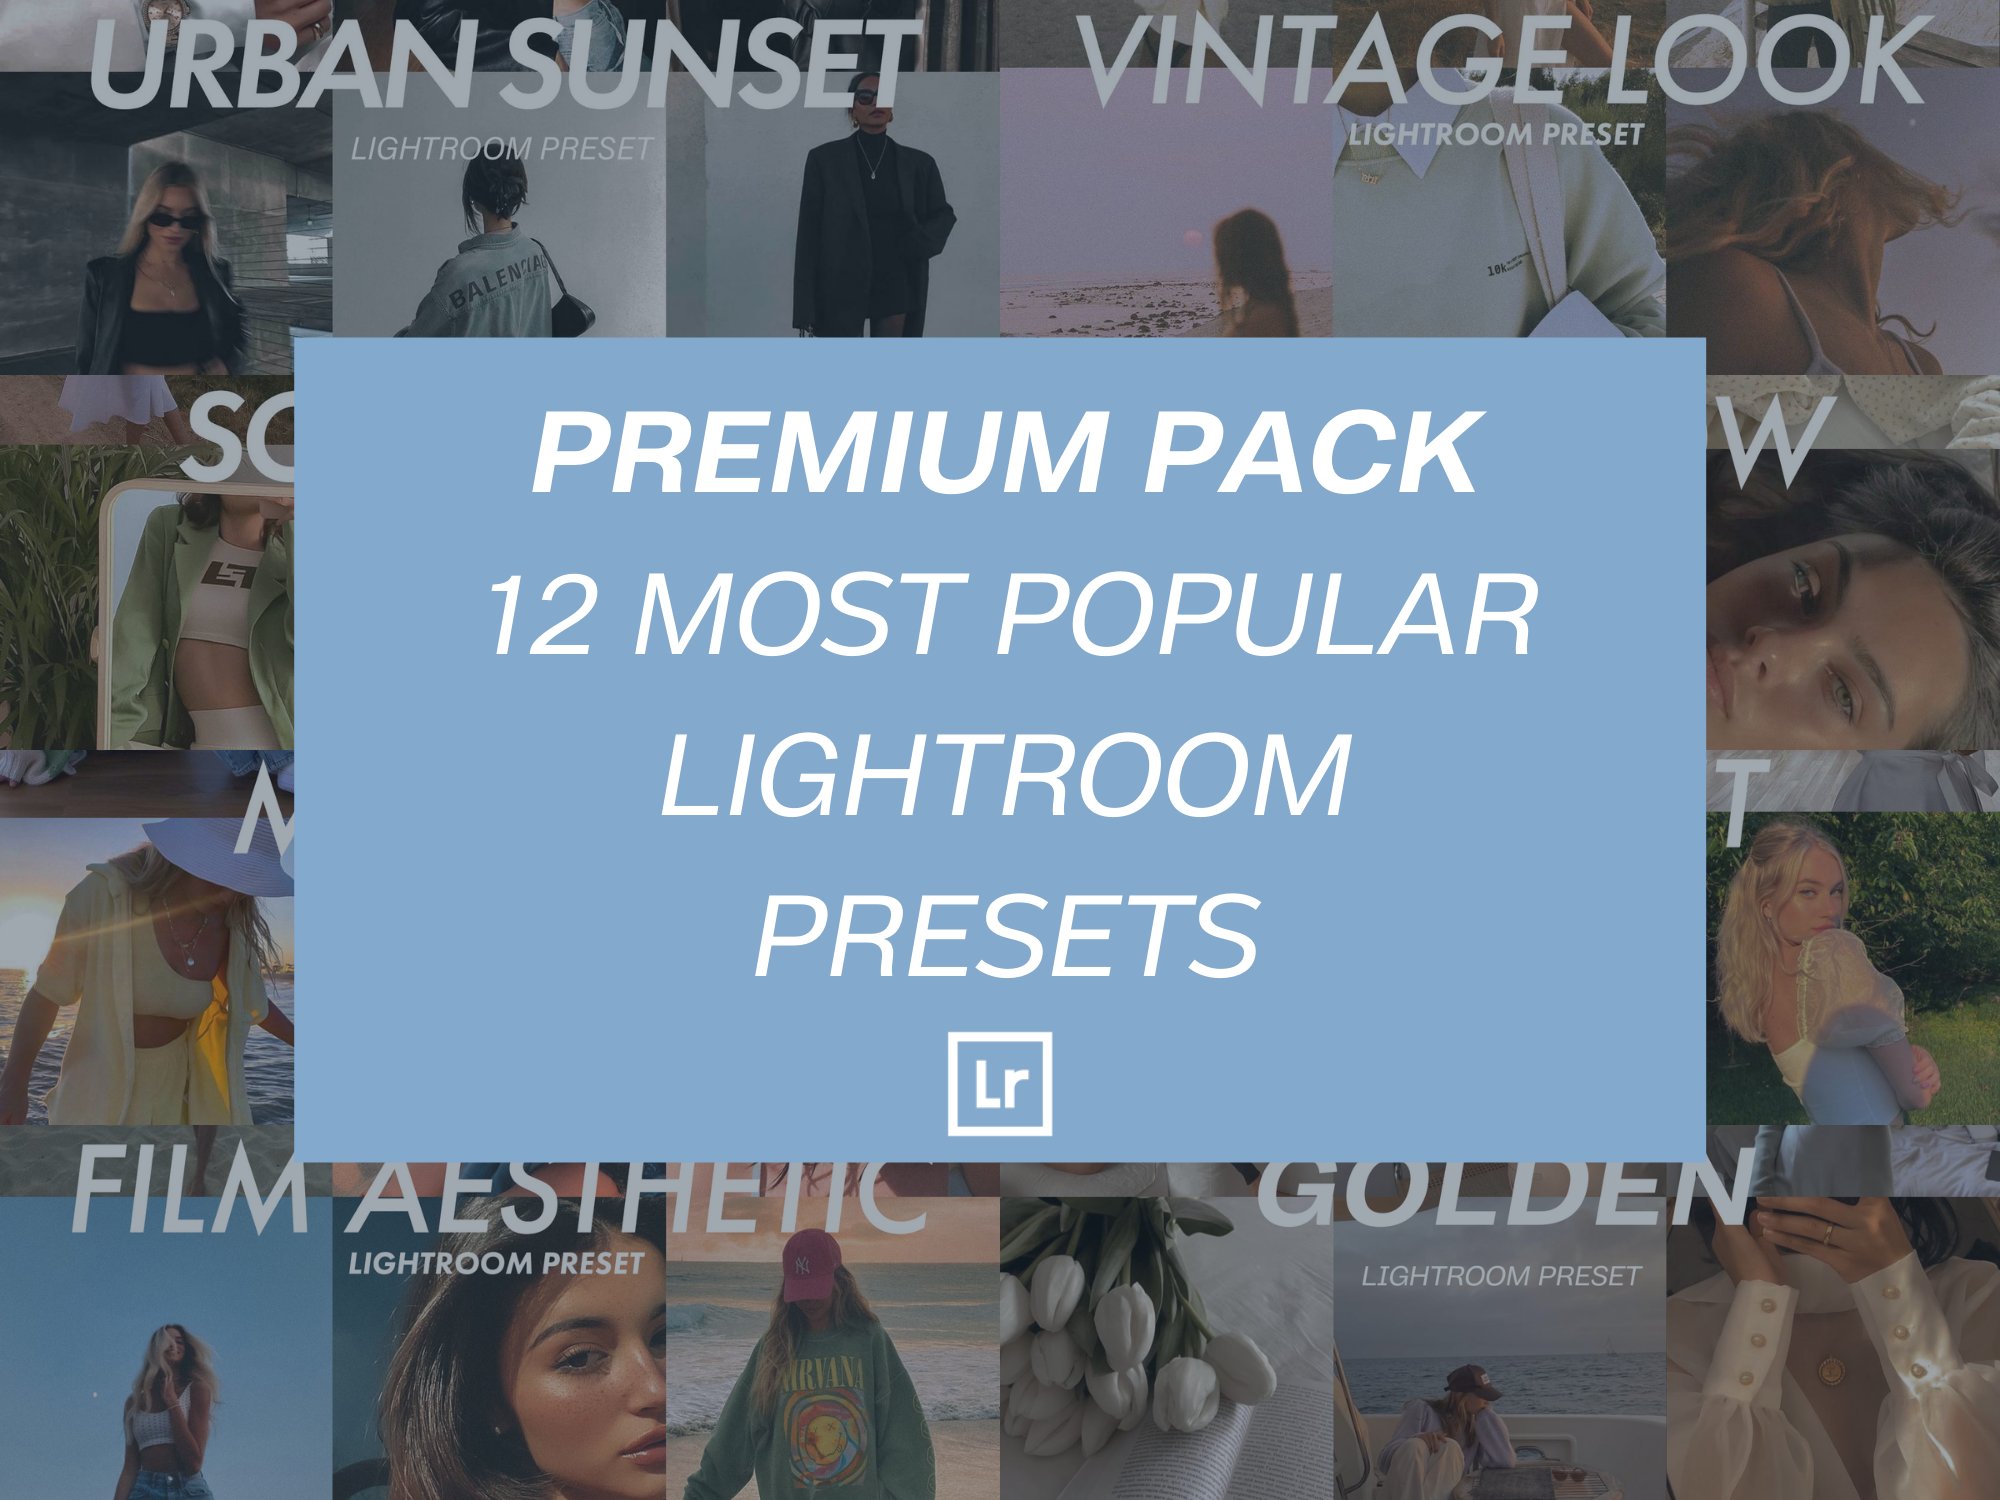 Pack 12 Premium Lightroom Presetscover image.